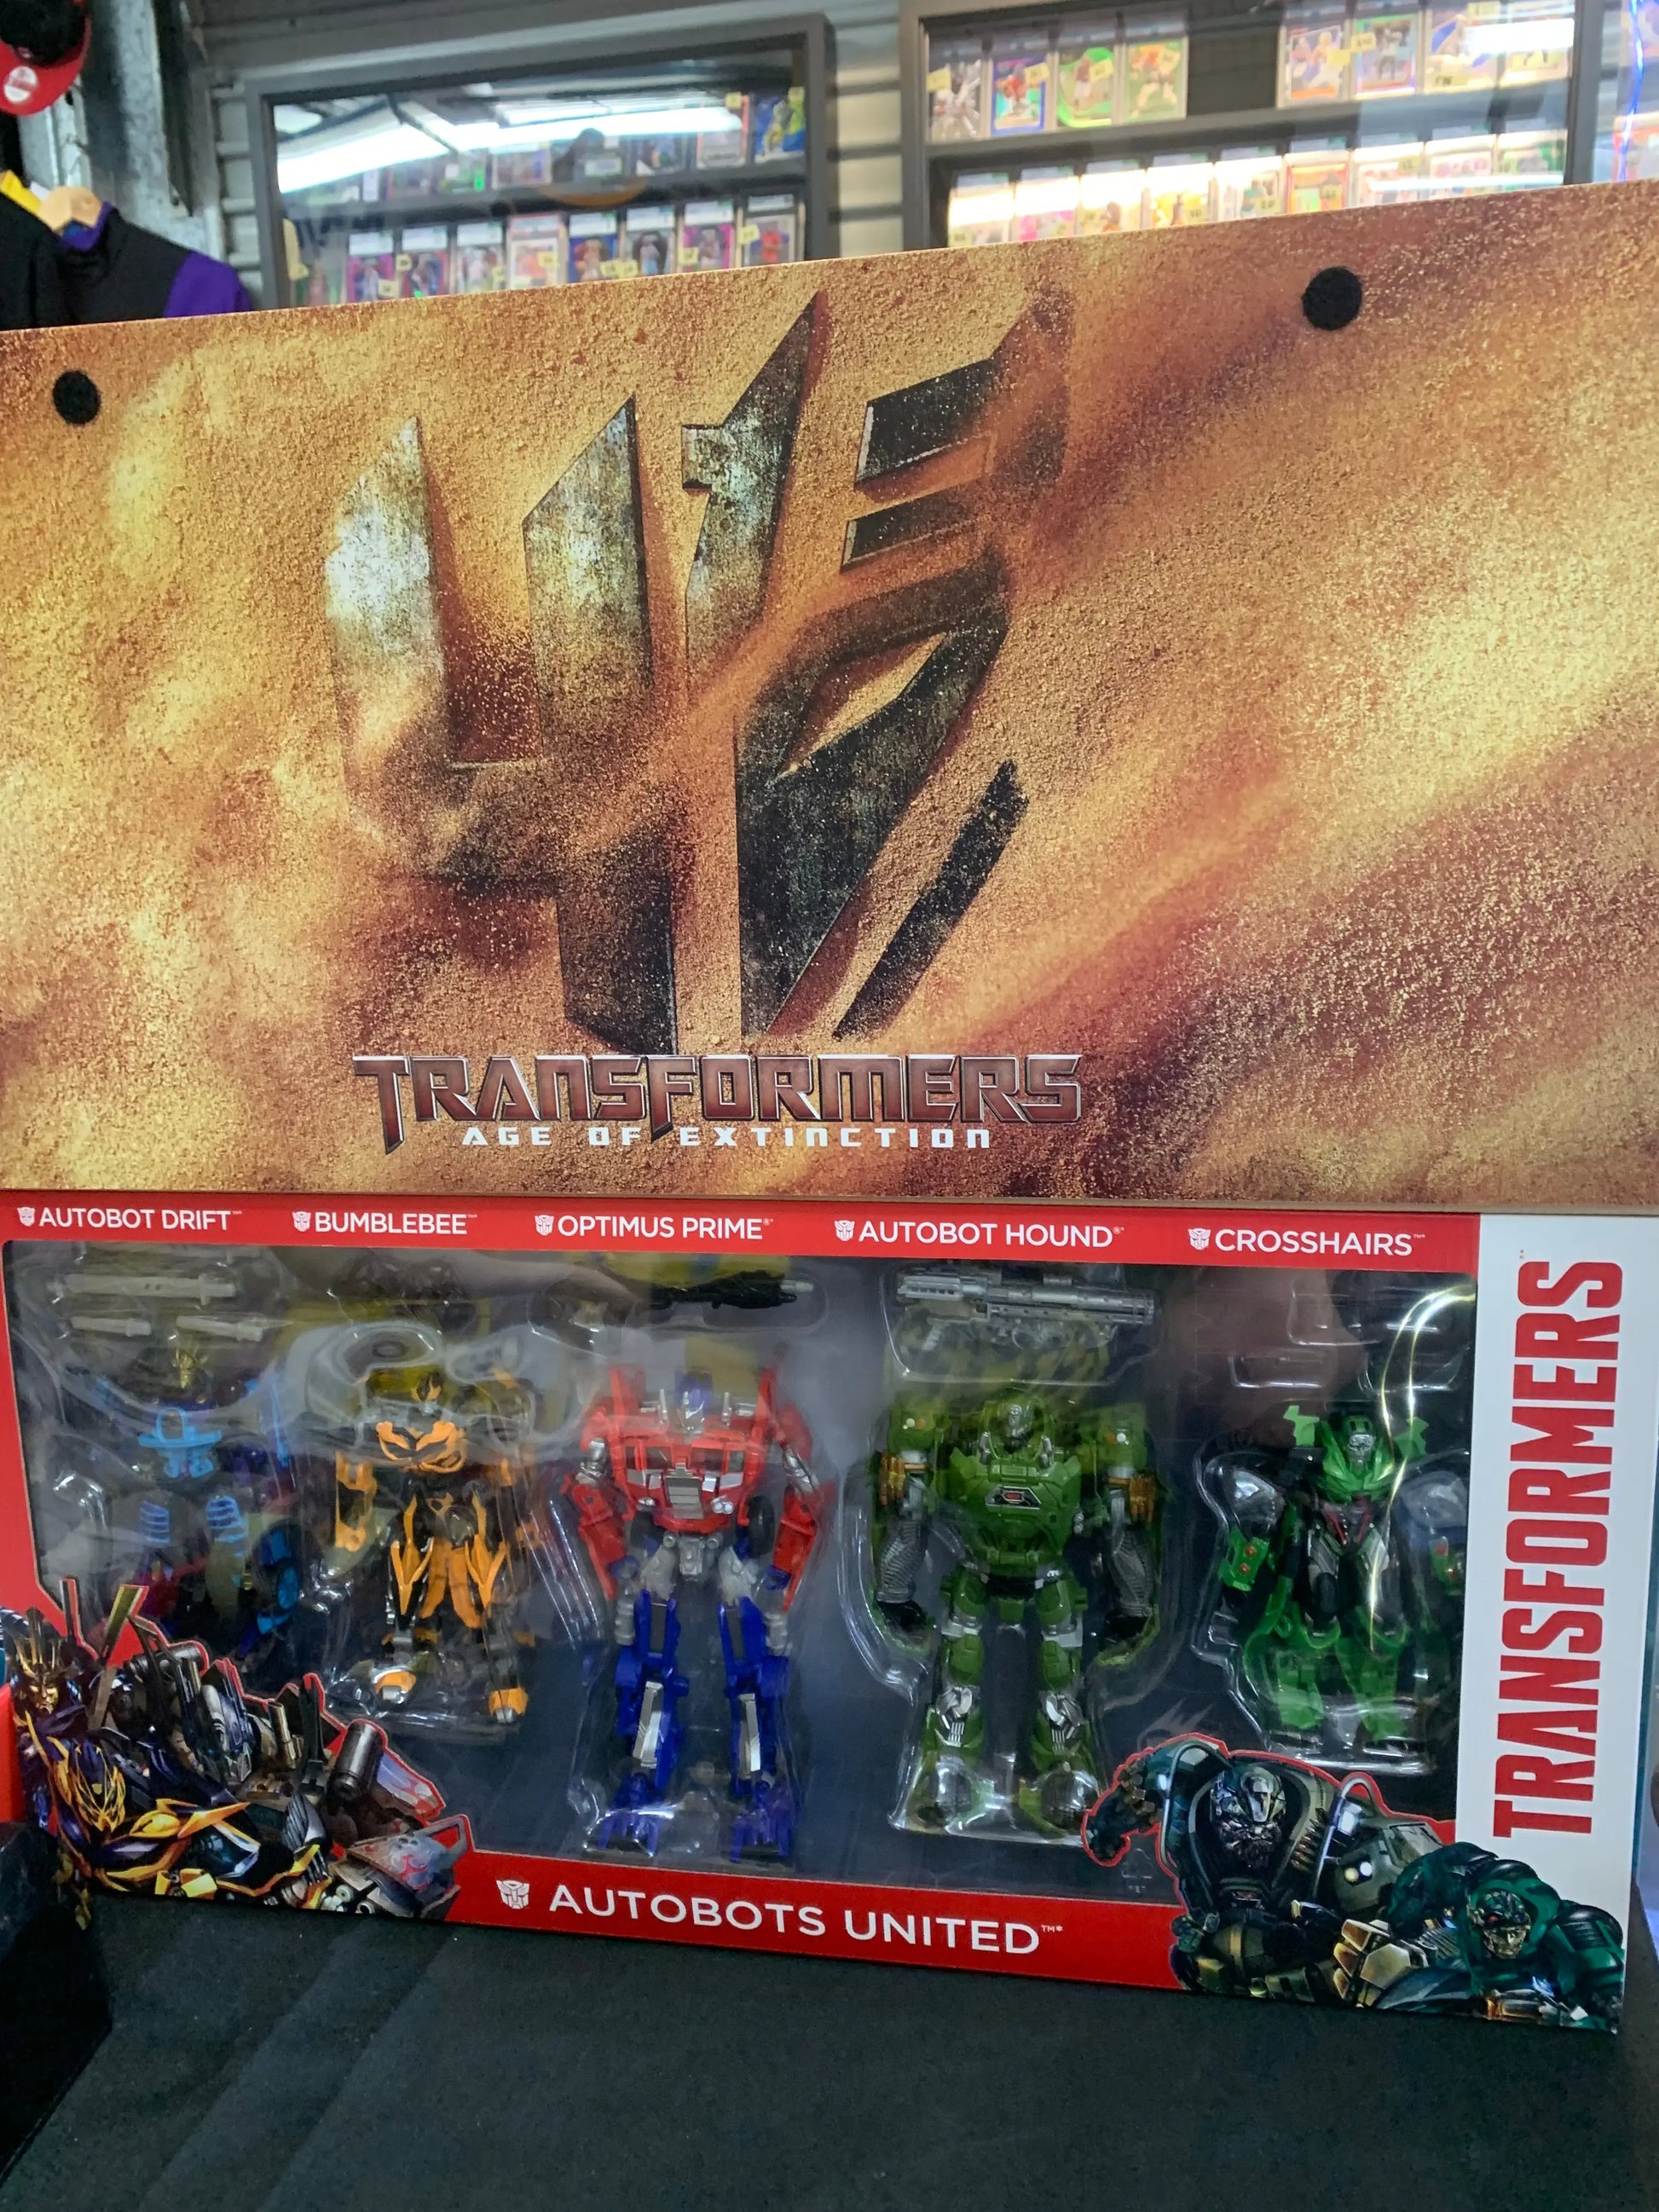 Transformers Platinum Edition Autobots United 5 Pack - Brand New FRENLY BRICKS - Open 7 Days